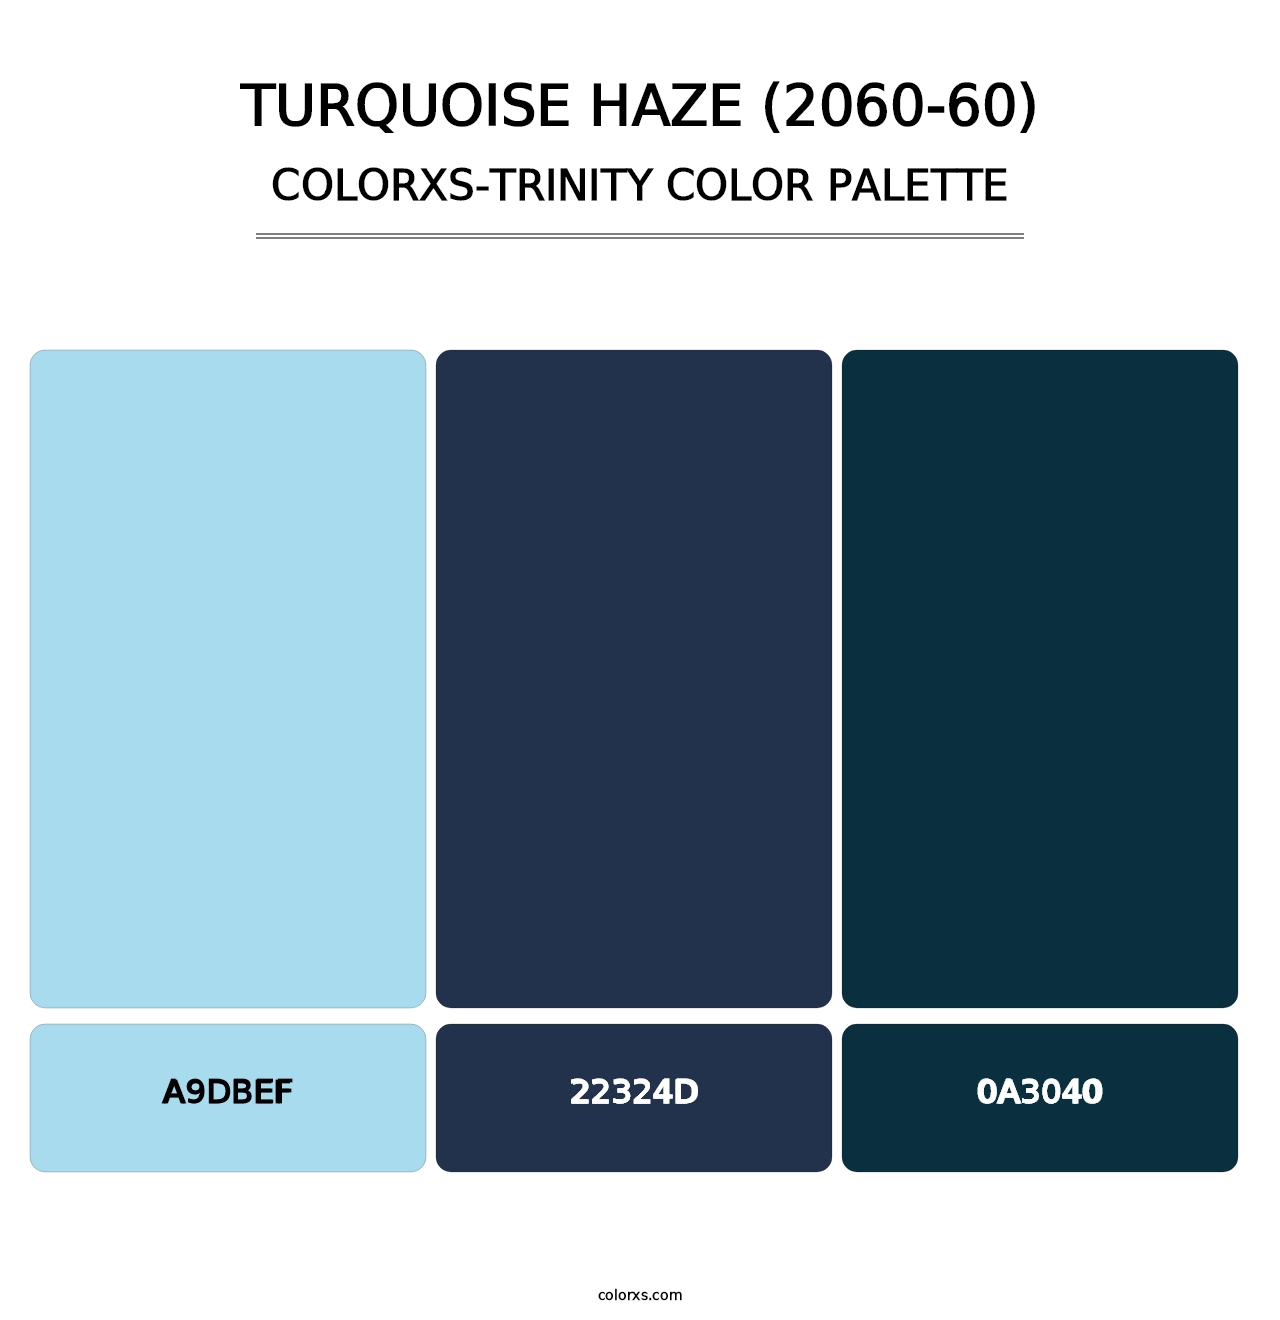 Turquoise Haze (2060-60) - Colorxs Trinity Palette